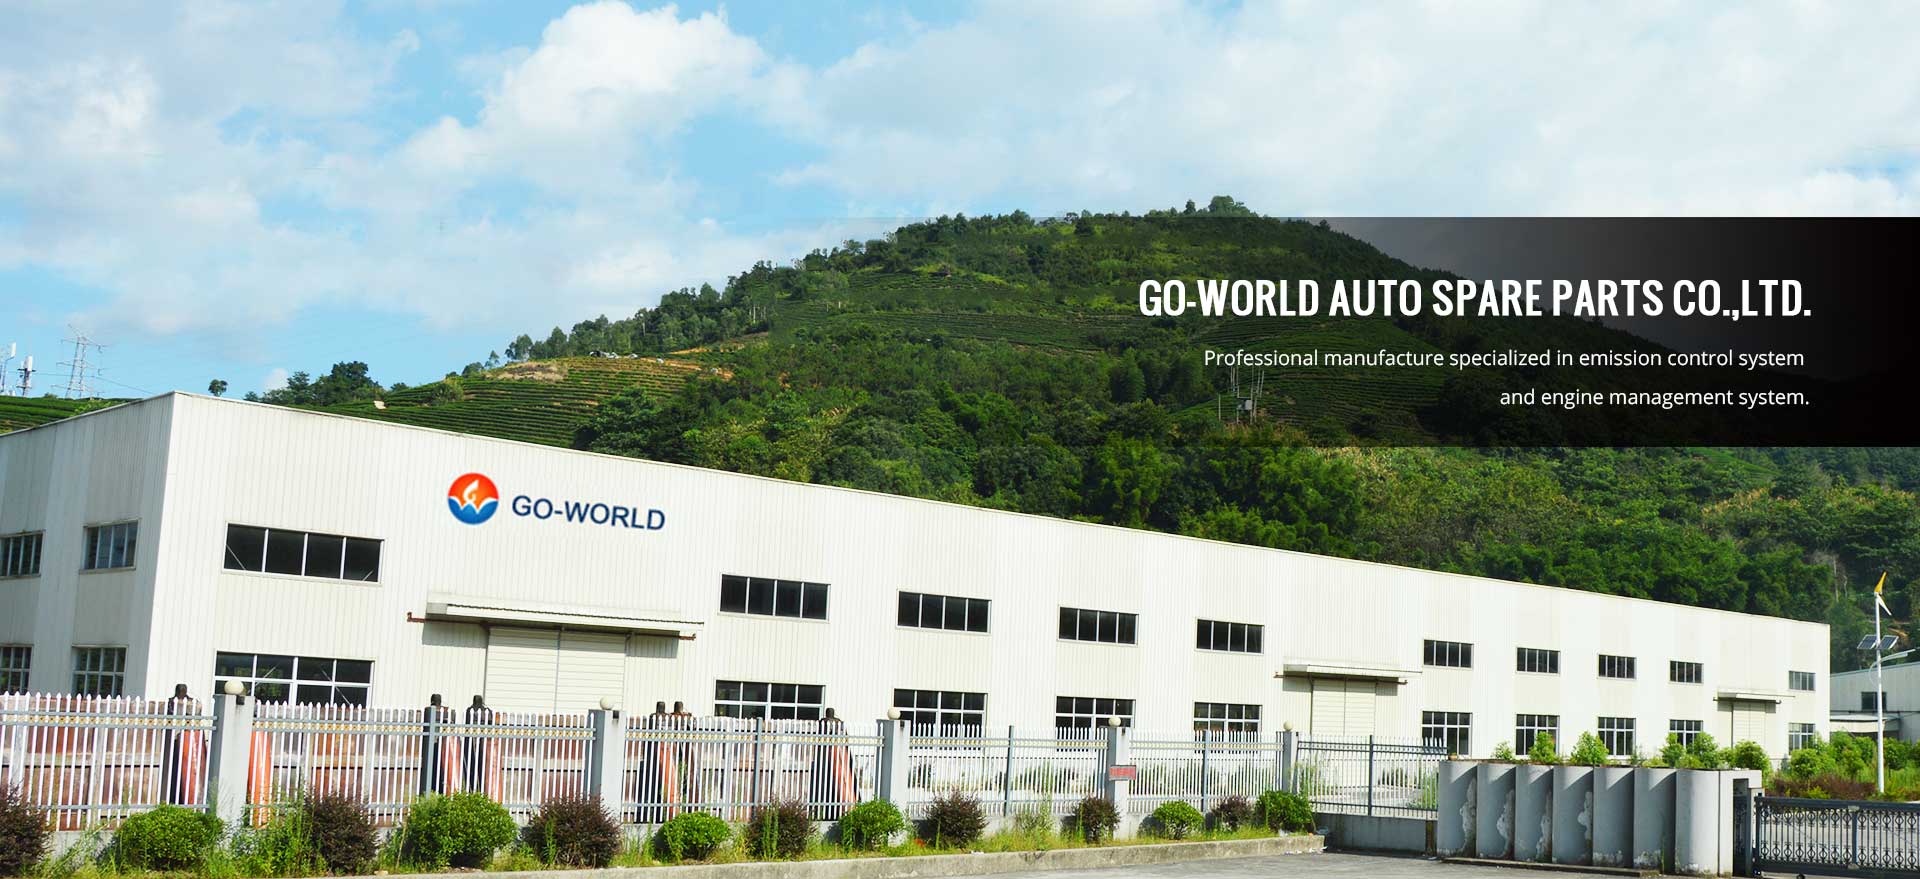 GO-WORLD AUTO SPARE PARTSCO.,LTD